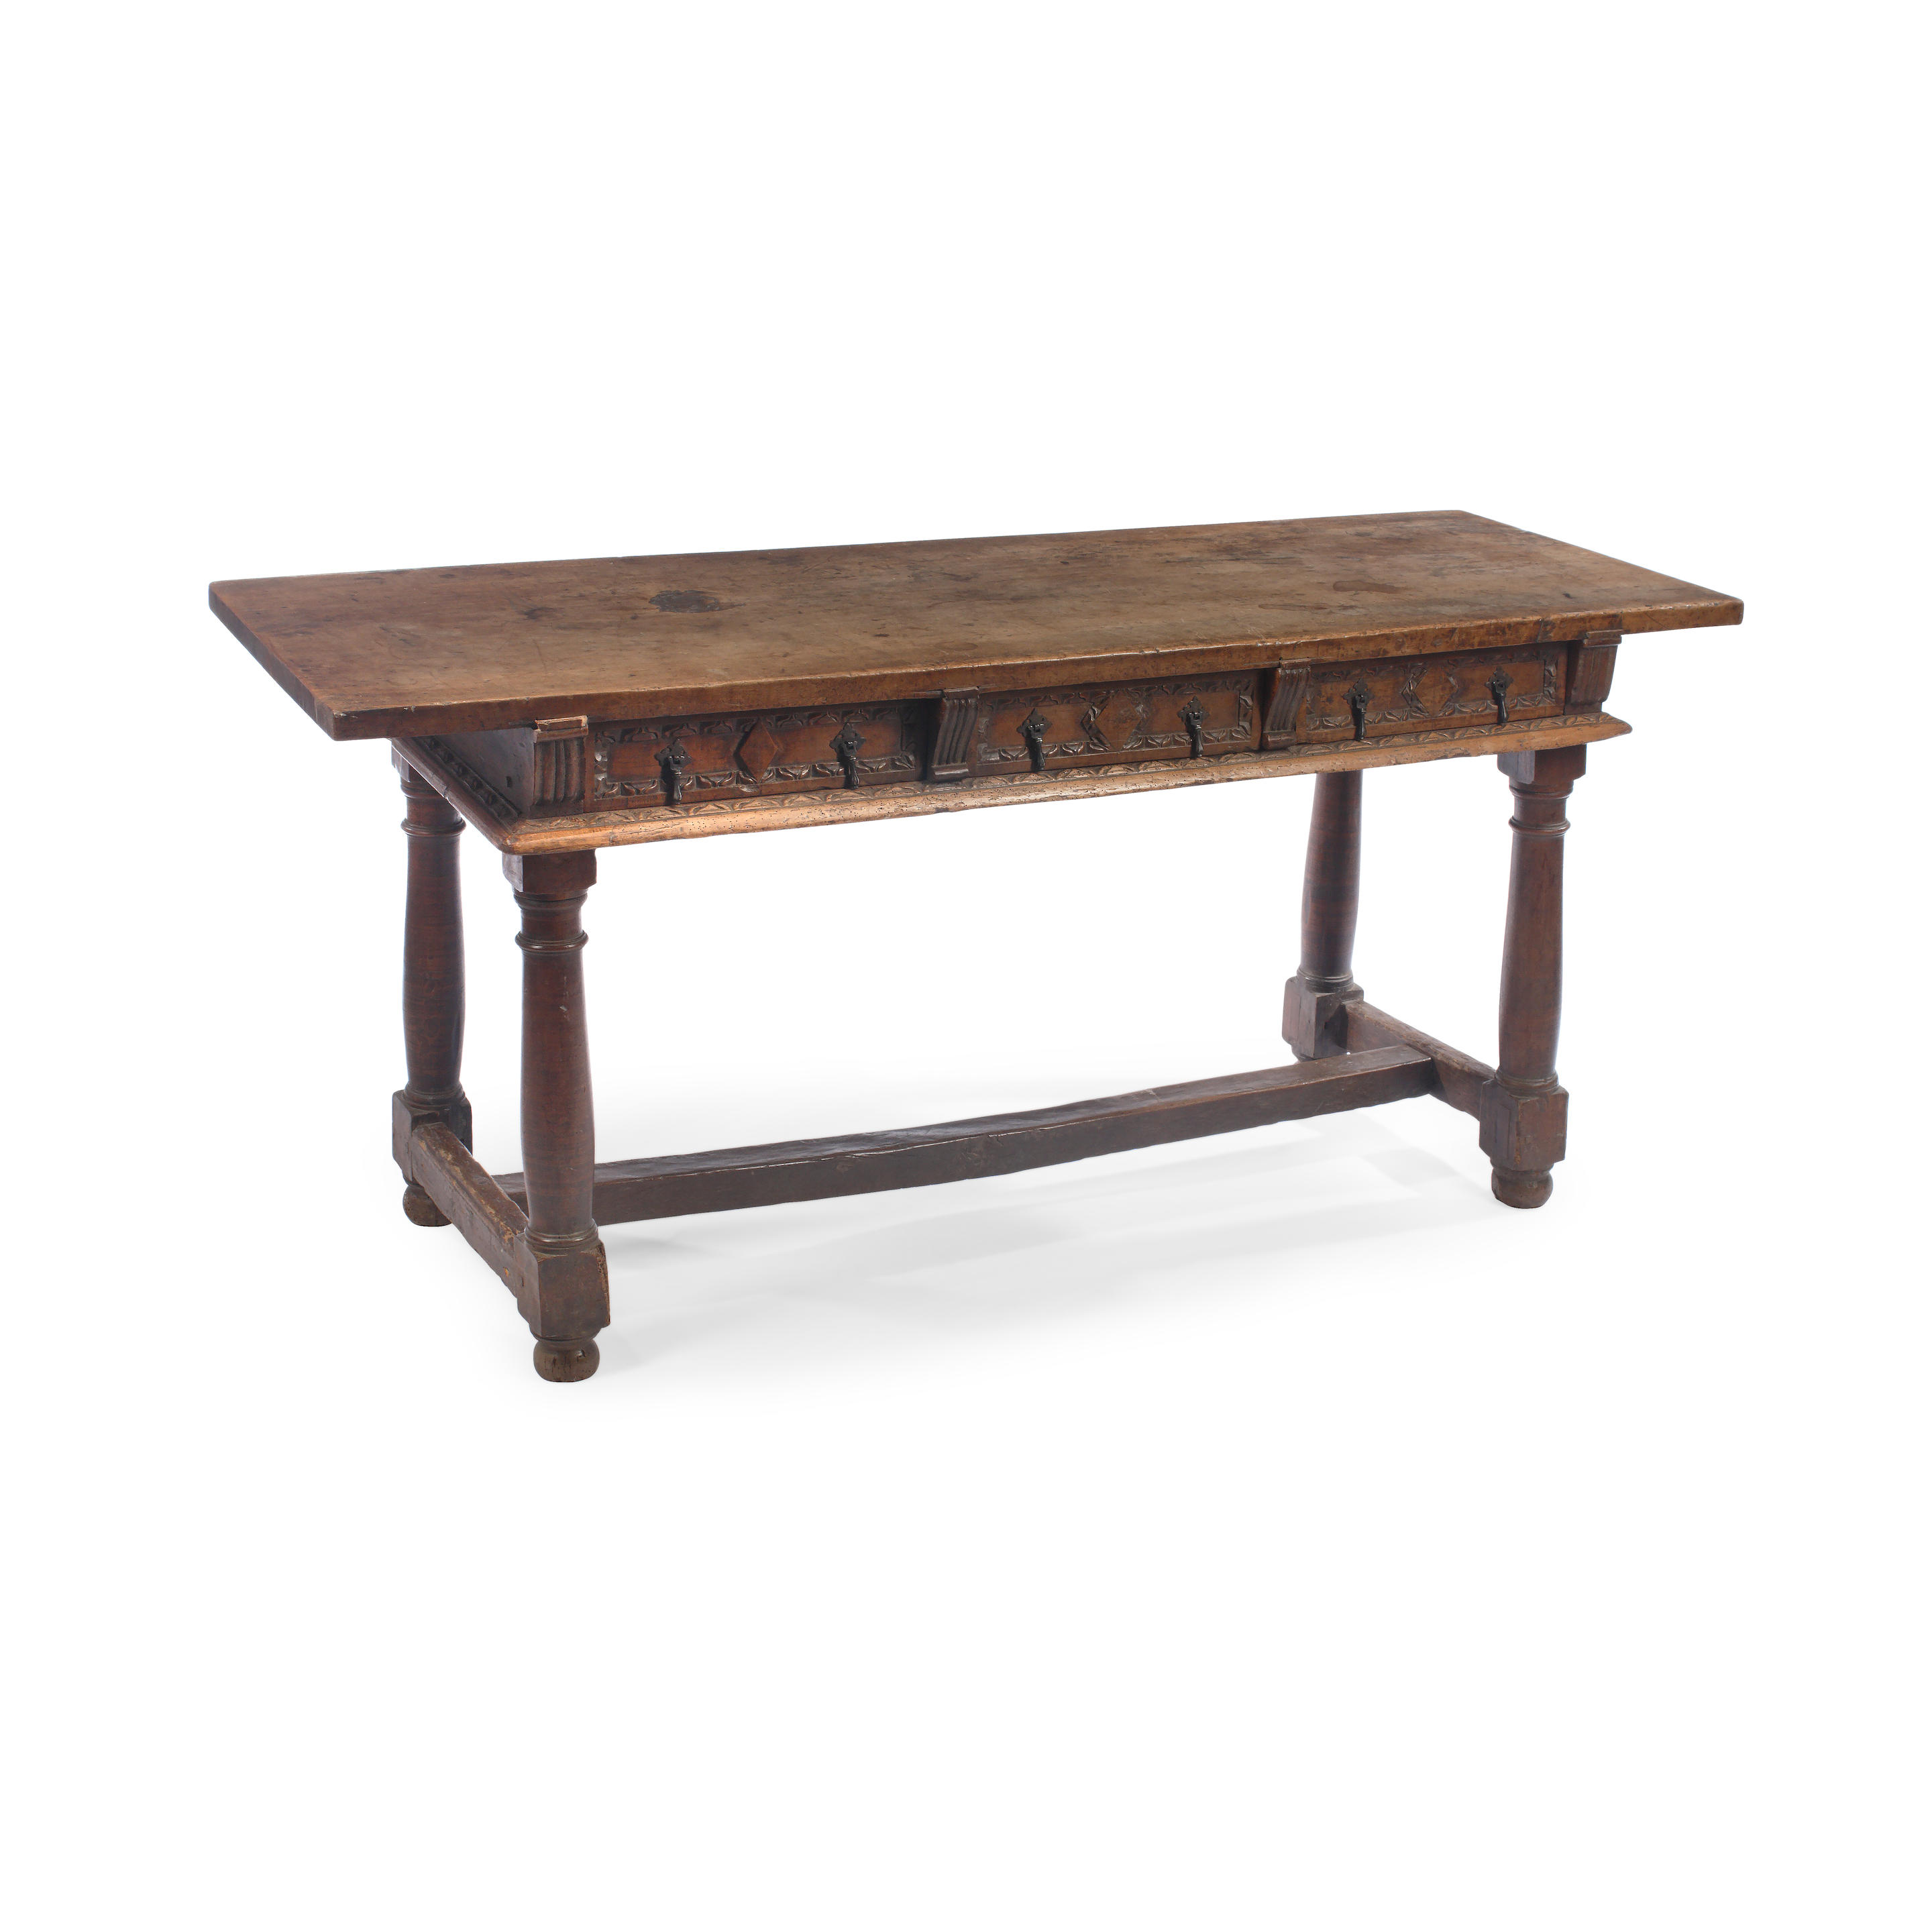 A Baroque Oak Refectory Table